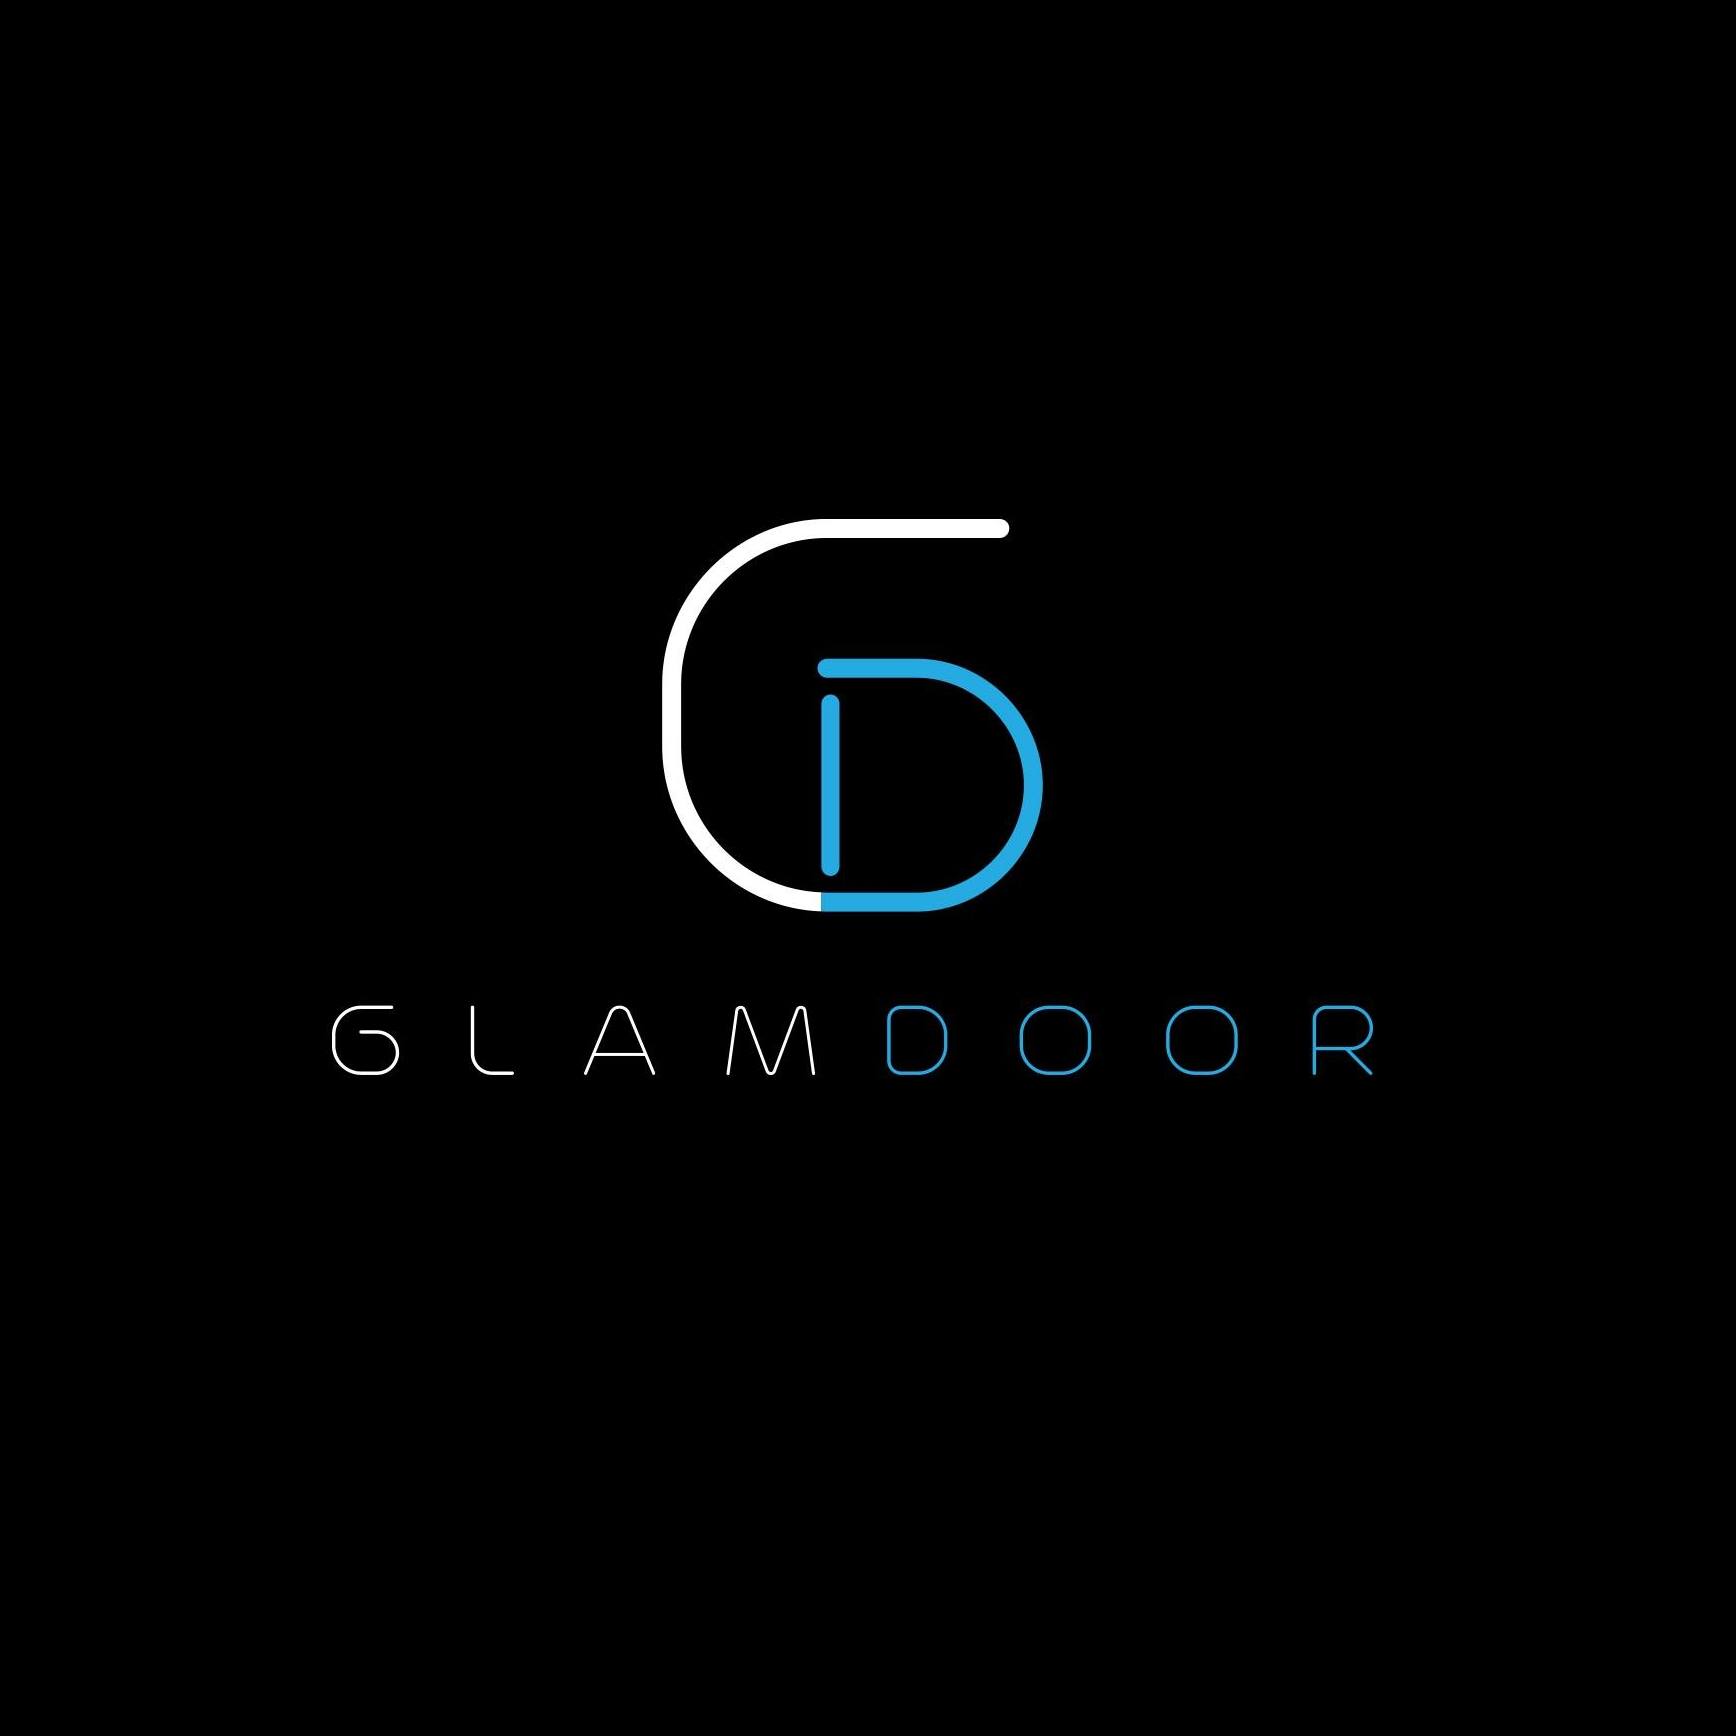 Glam Door Unisex Salon - Logo